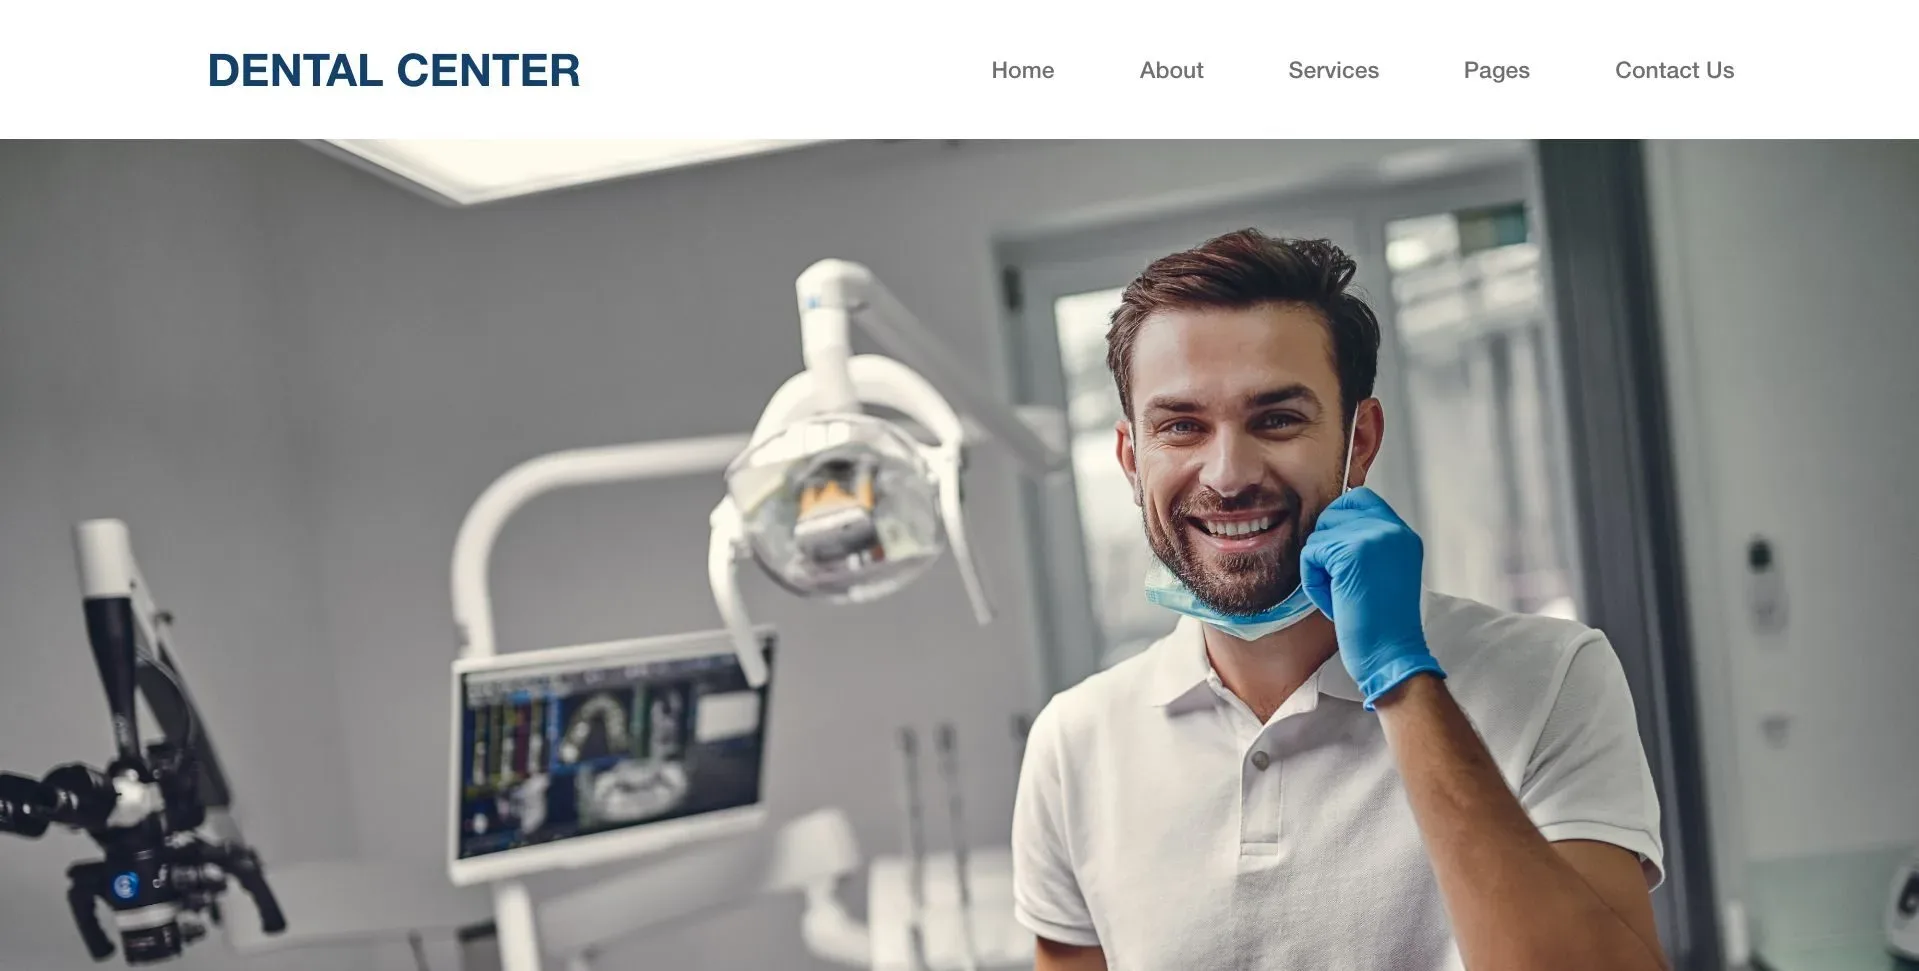 Dental Center Website Design